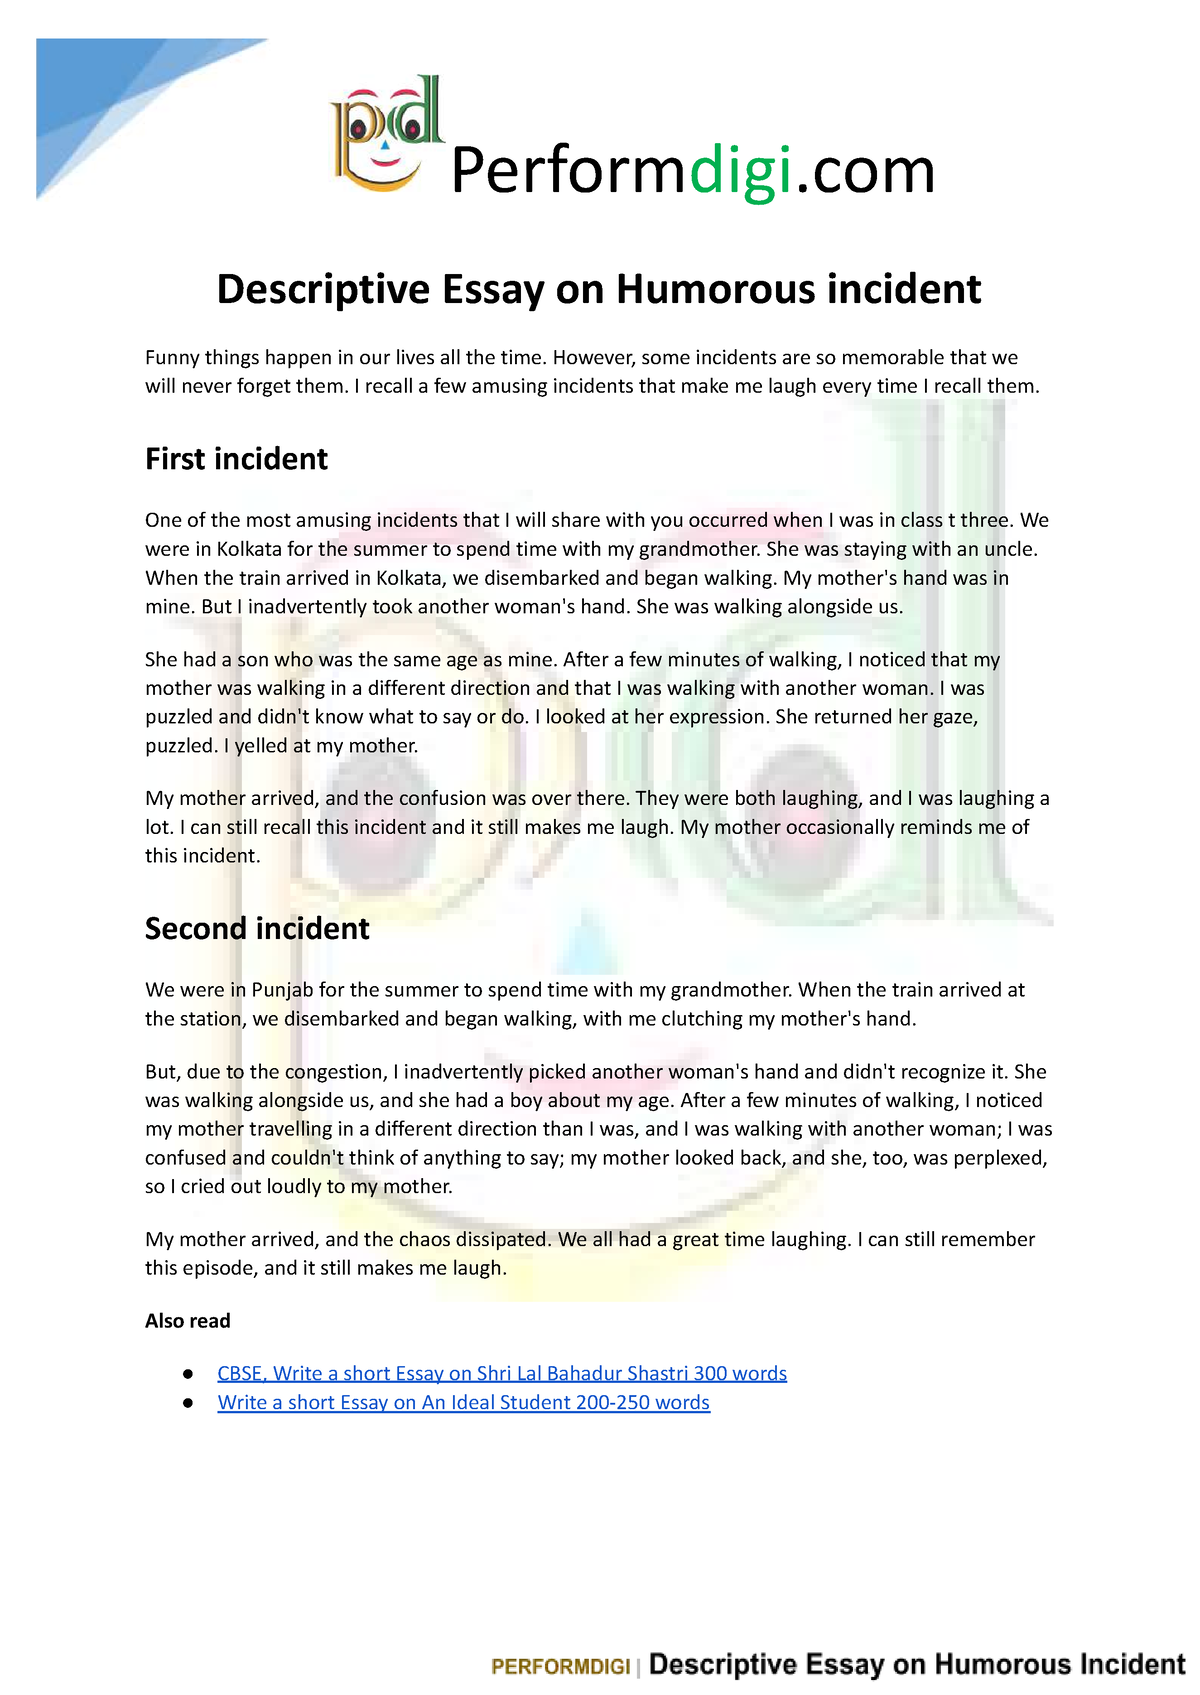 write a descriptive essay on humorous incident